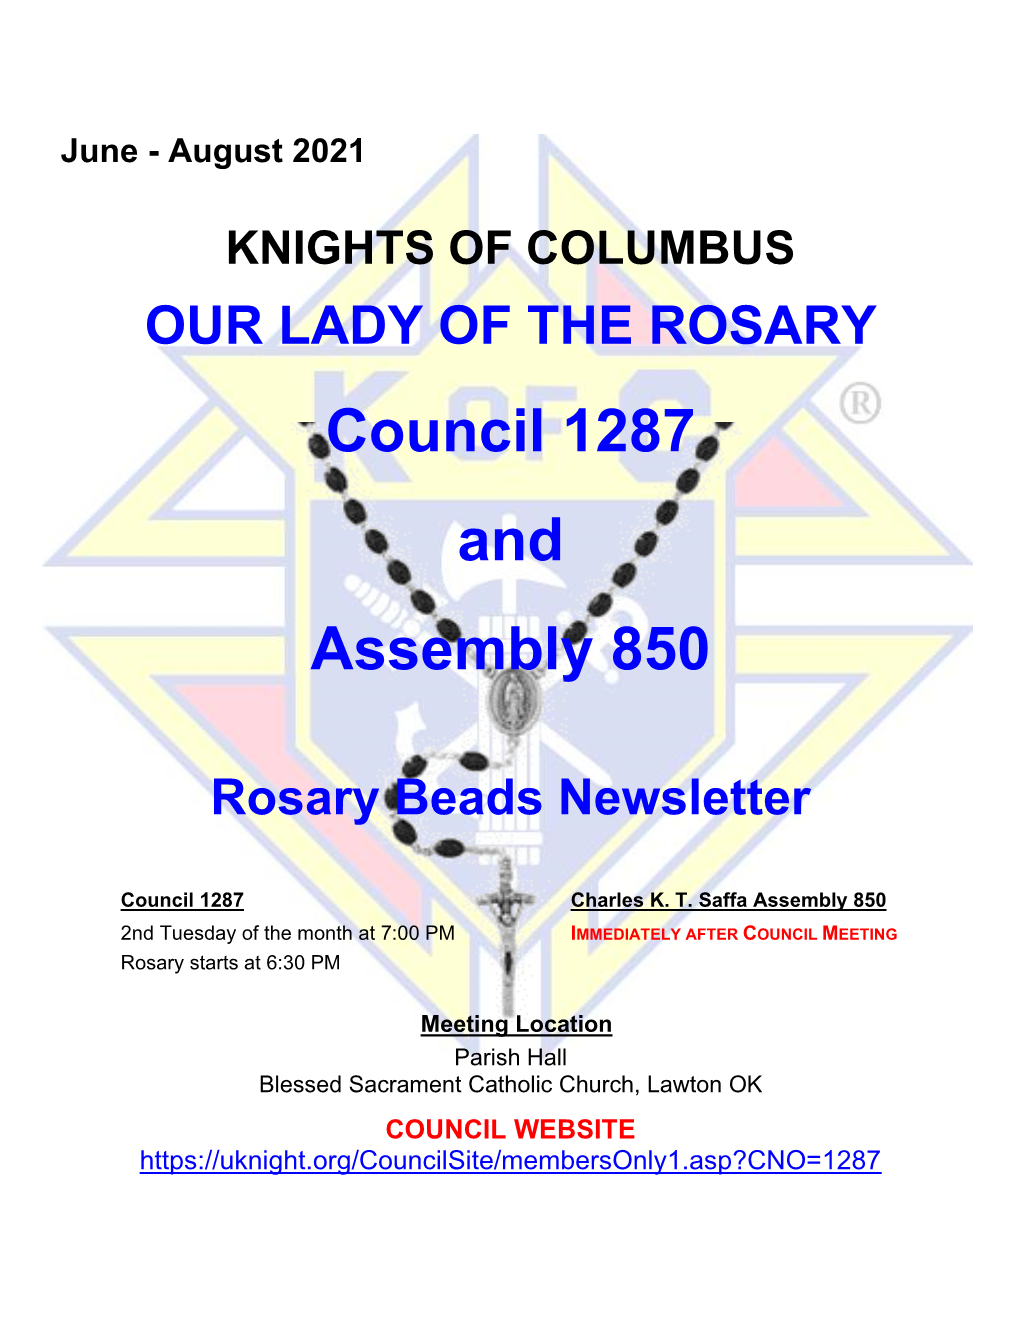 August 2021 Rosary Beads Newsletter